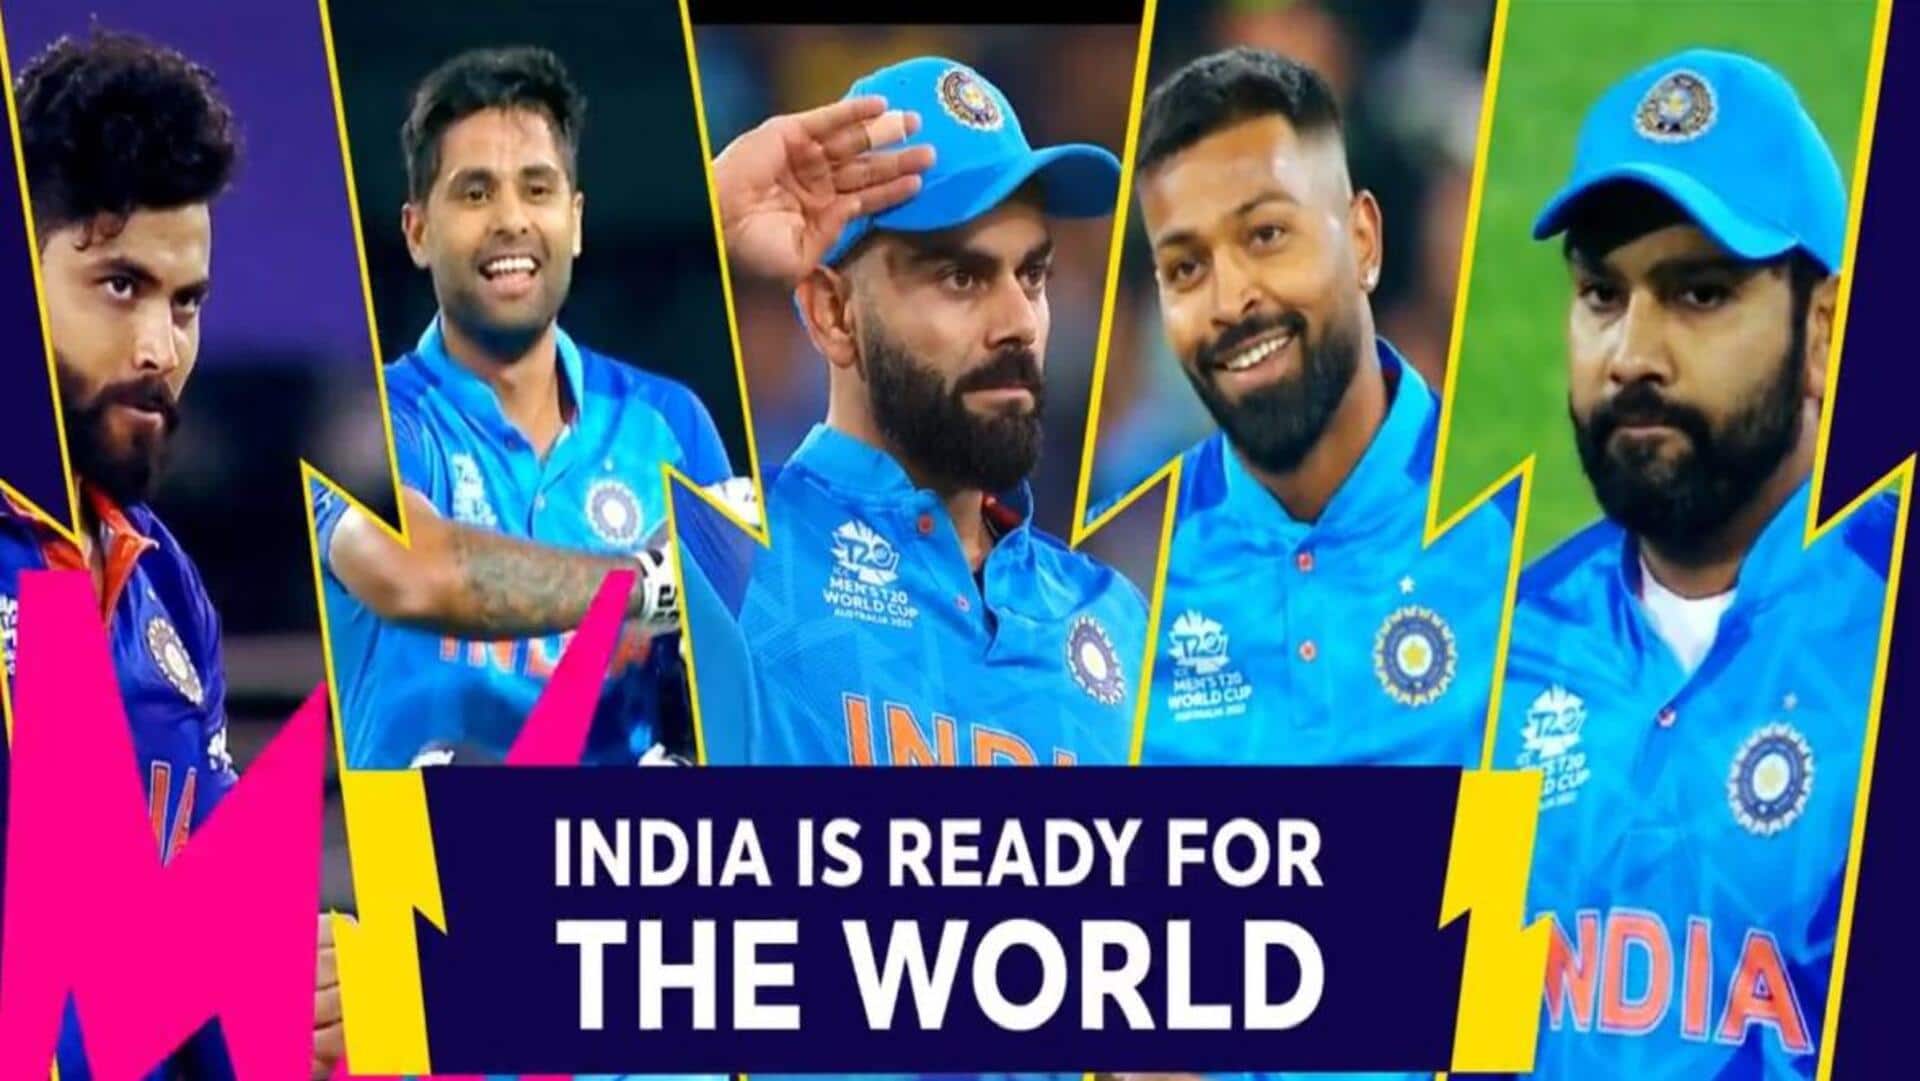 T20-World cup-Promo-Team India: గూస్ బంప్స్ తెప్పిస్తున్న టీ20 వరల్డ్ కప్ టీమిండియా ప్రోమో వీడియో